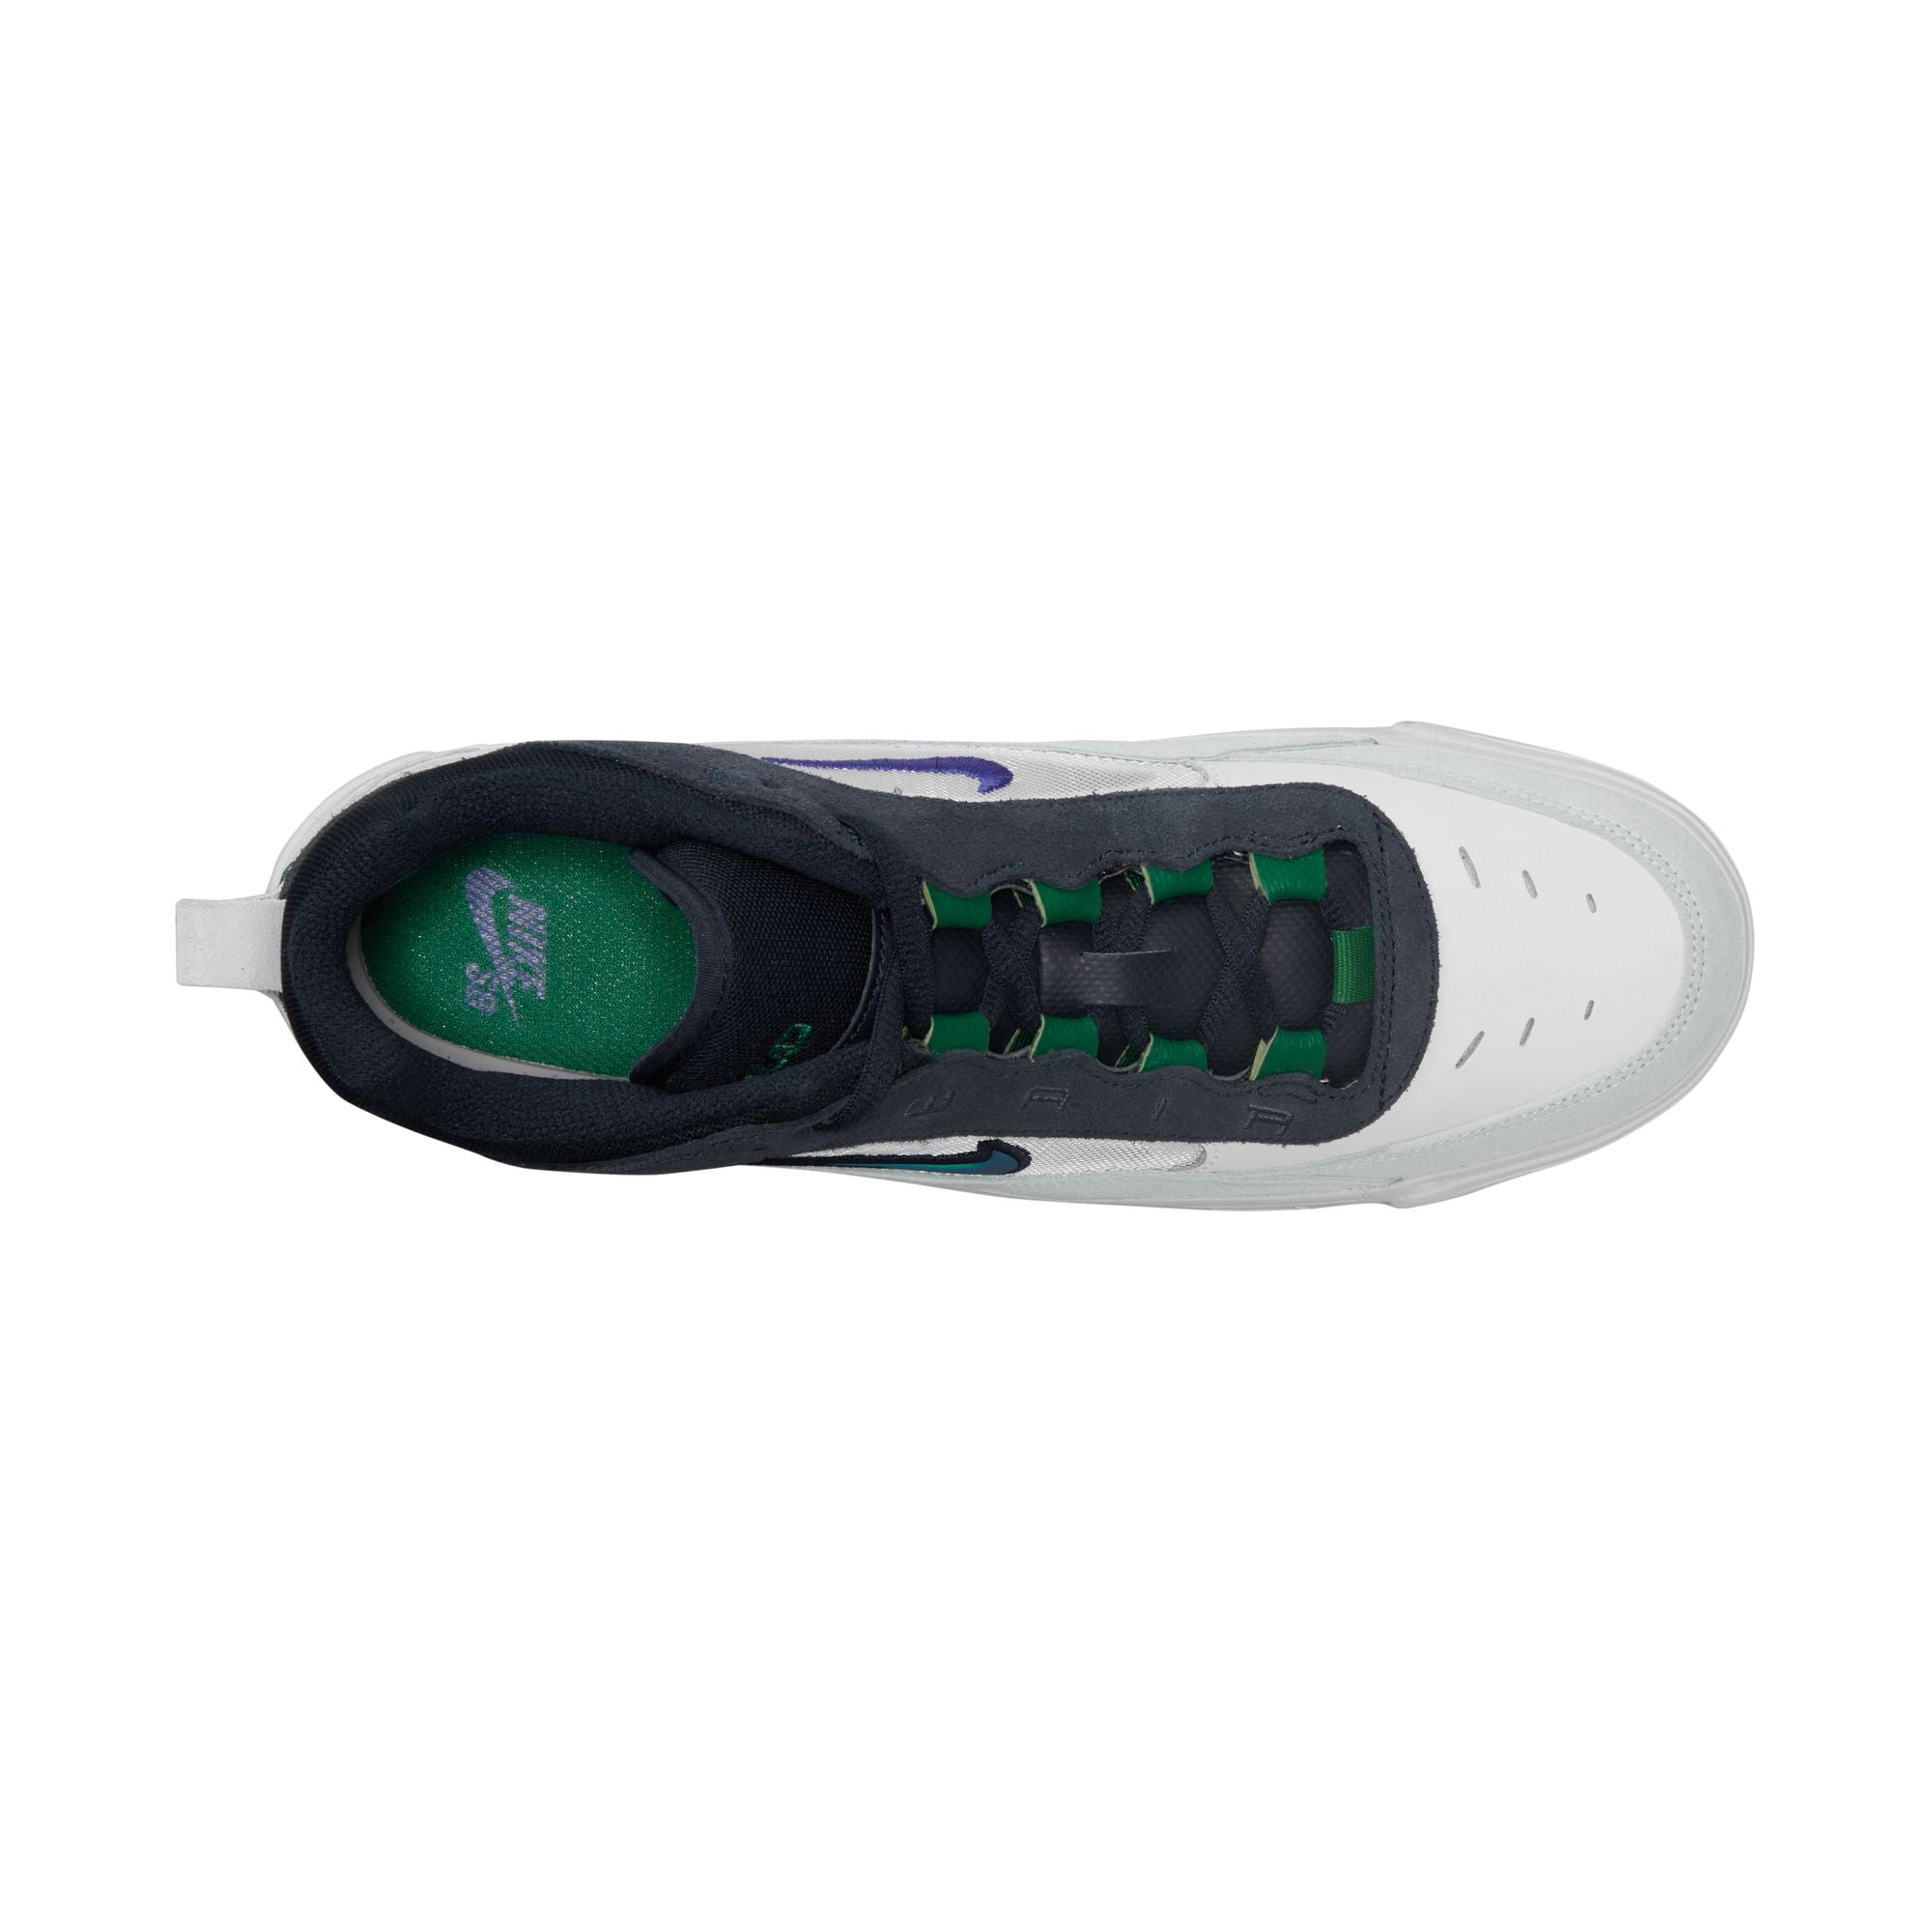 Nike Air Max Ishod Shoe - White/Persian Violet-Obsidian-Pine Green